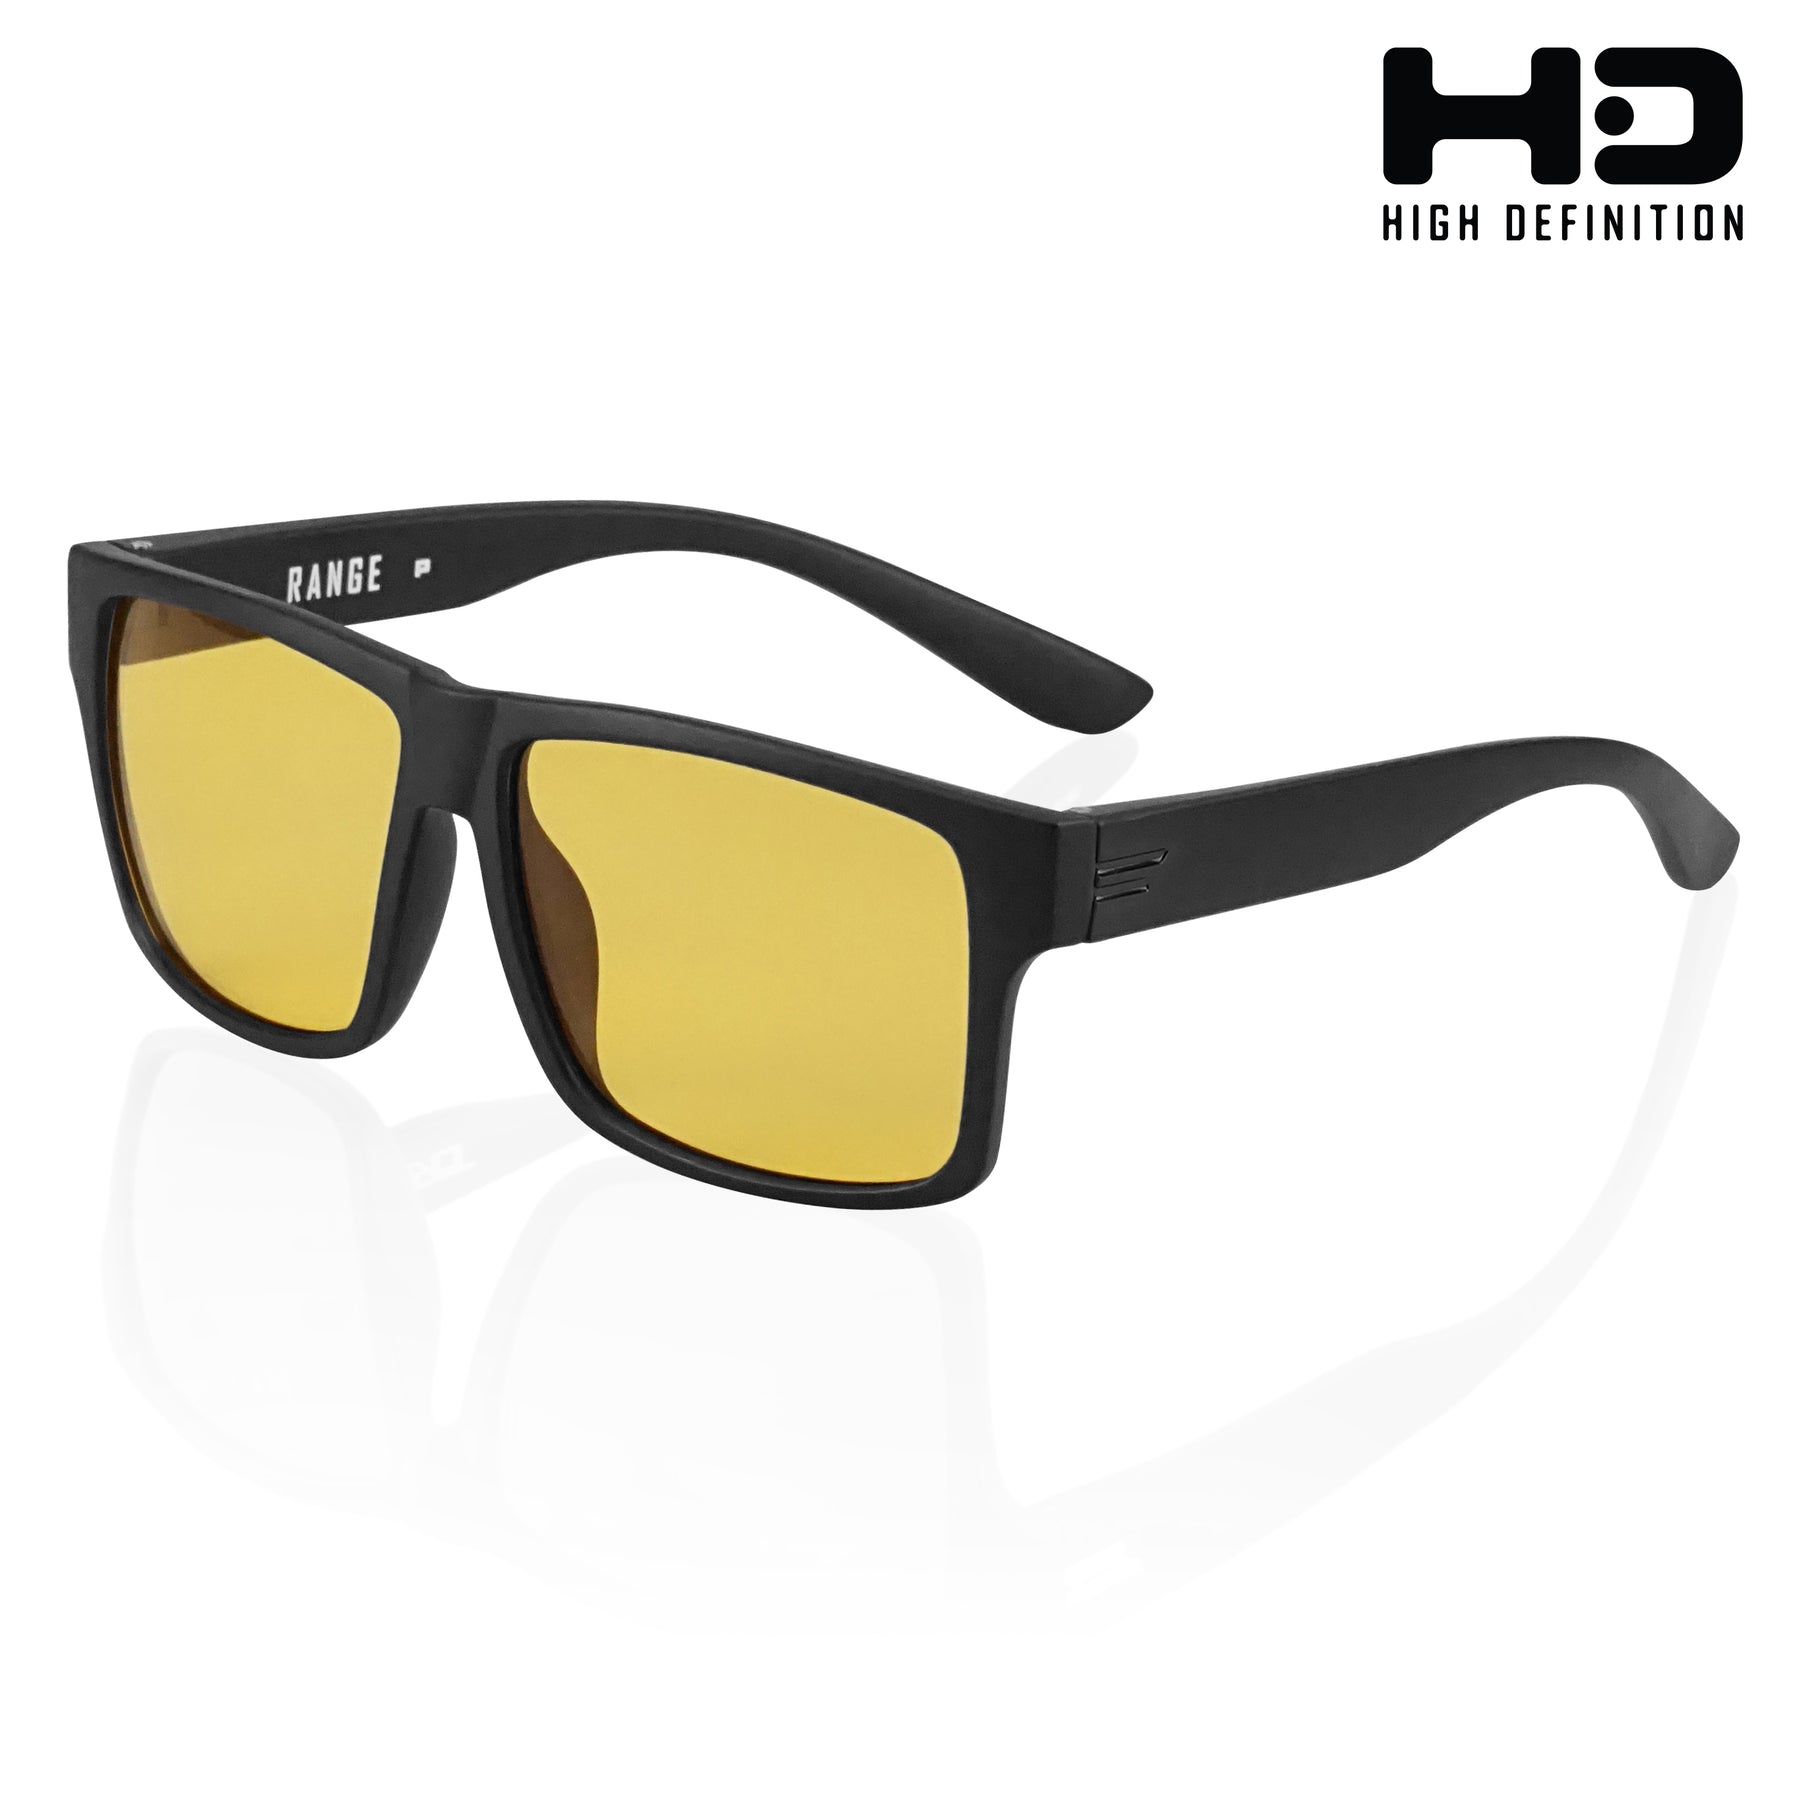 High Definition Sunglasses Night Driving Low Light Range HD Polarized White / HD Yellow